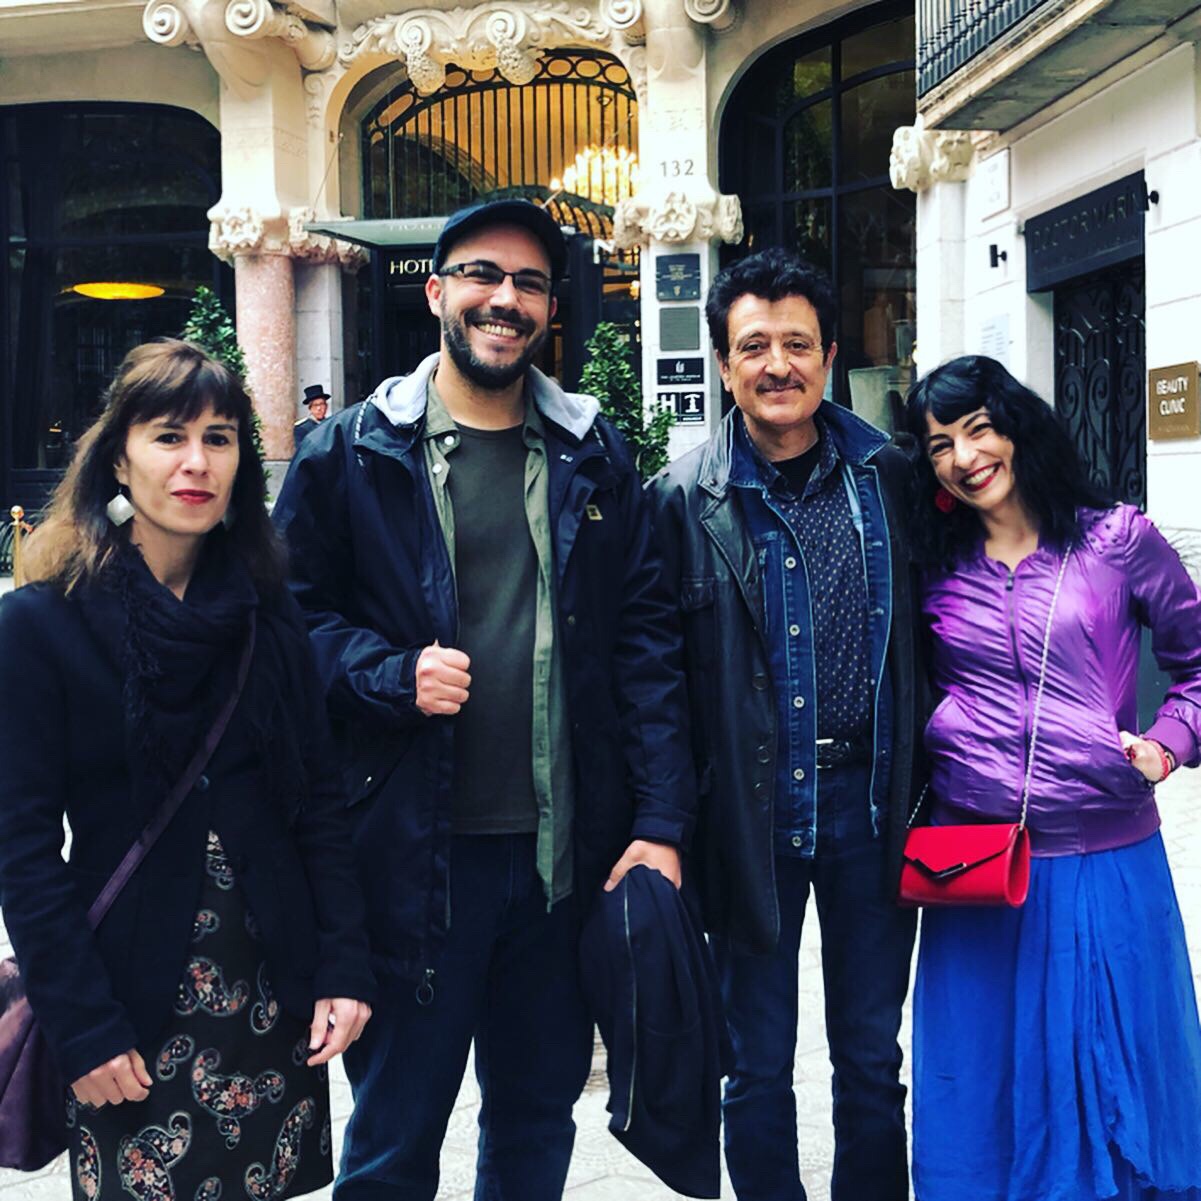 Manolo Garcia, Roser Amills, Aleko Capilouto, Veronica Nieto, Sant Jordi 2019